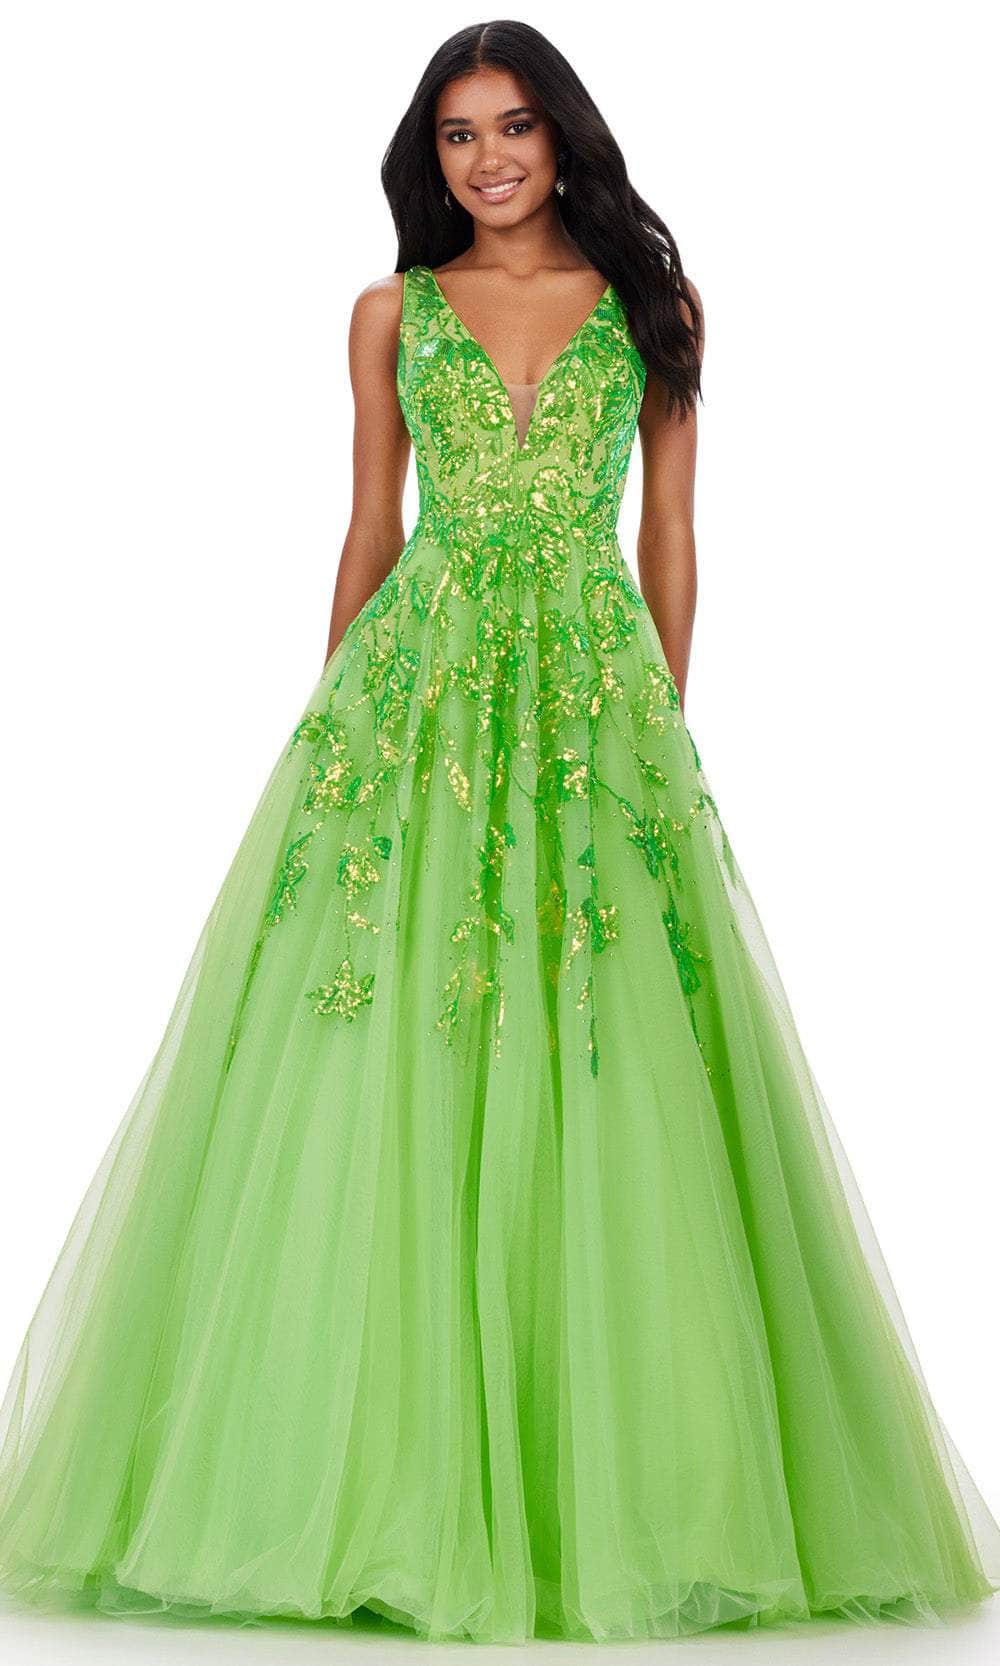 Ashley Lauren 11470 - Tulle Sequin Prom Dress 00 /  Neon Green